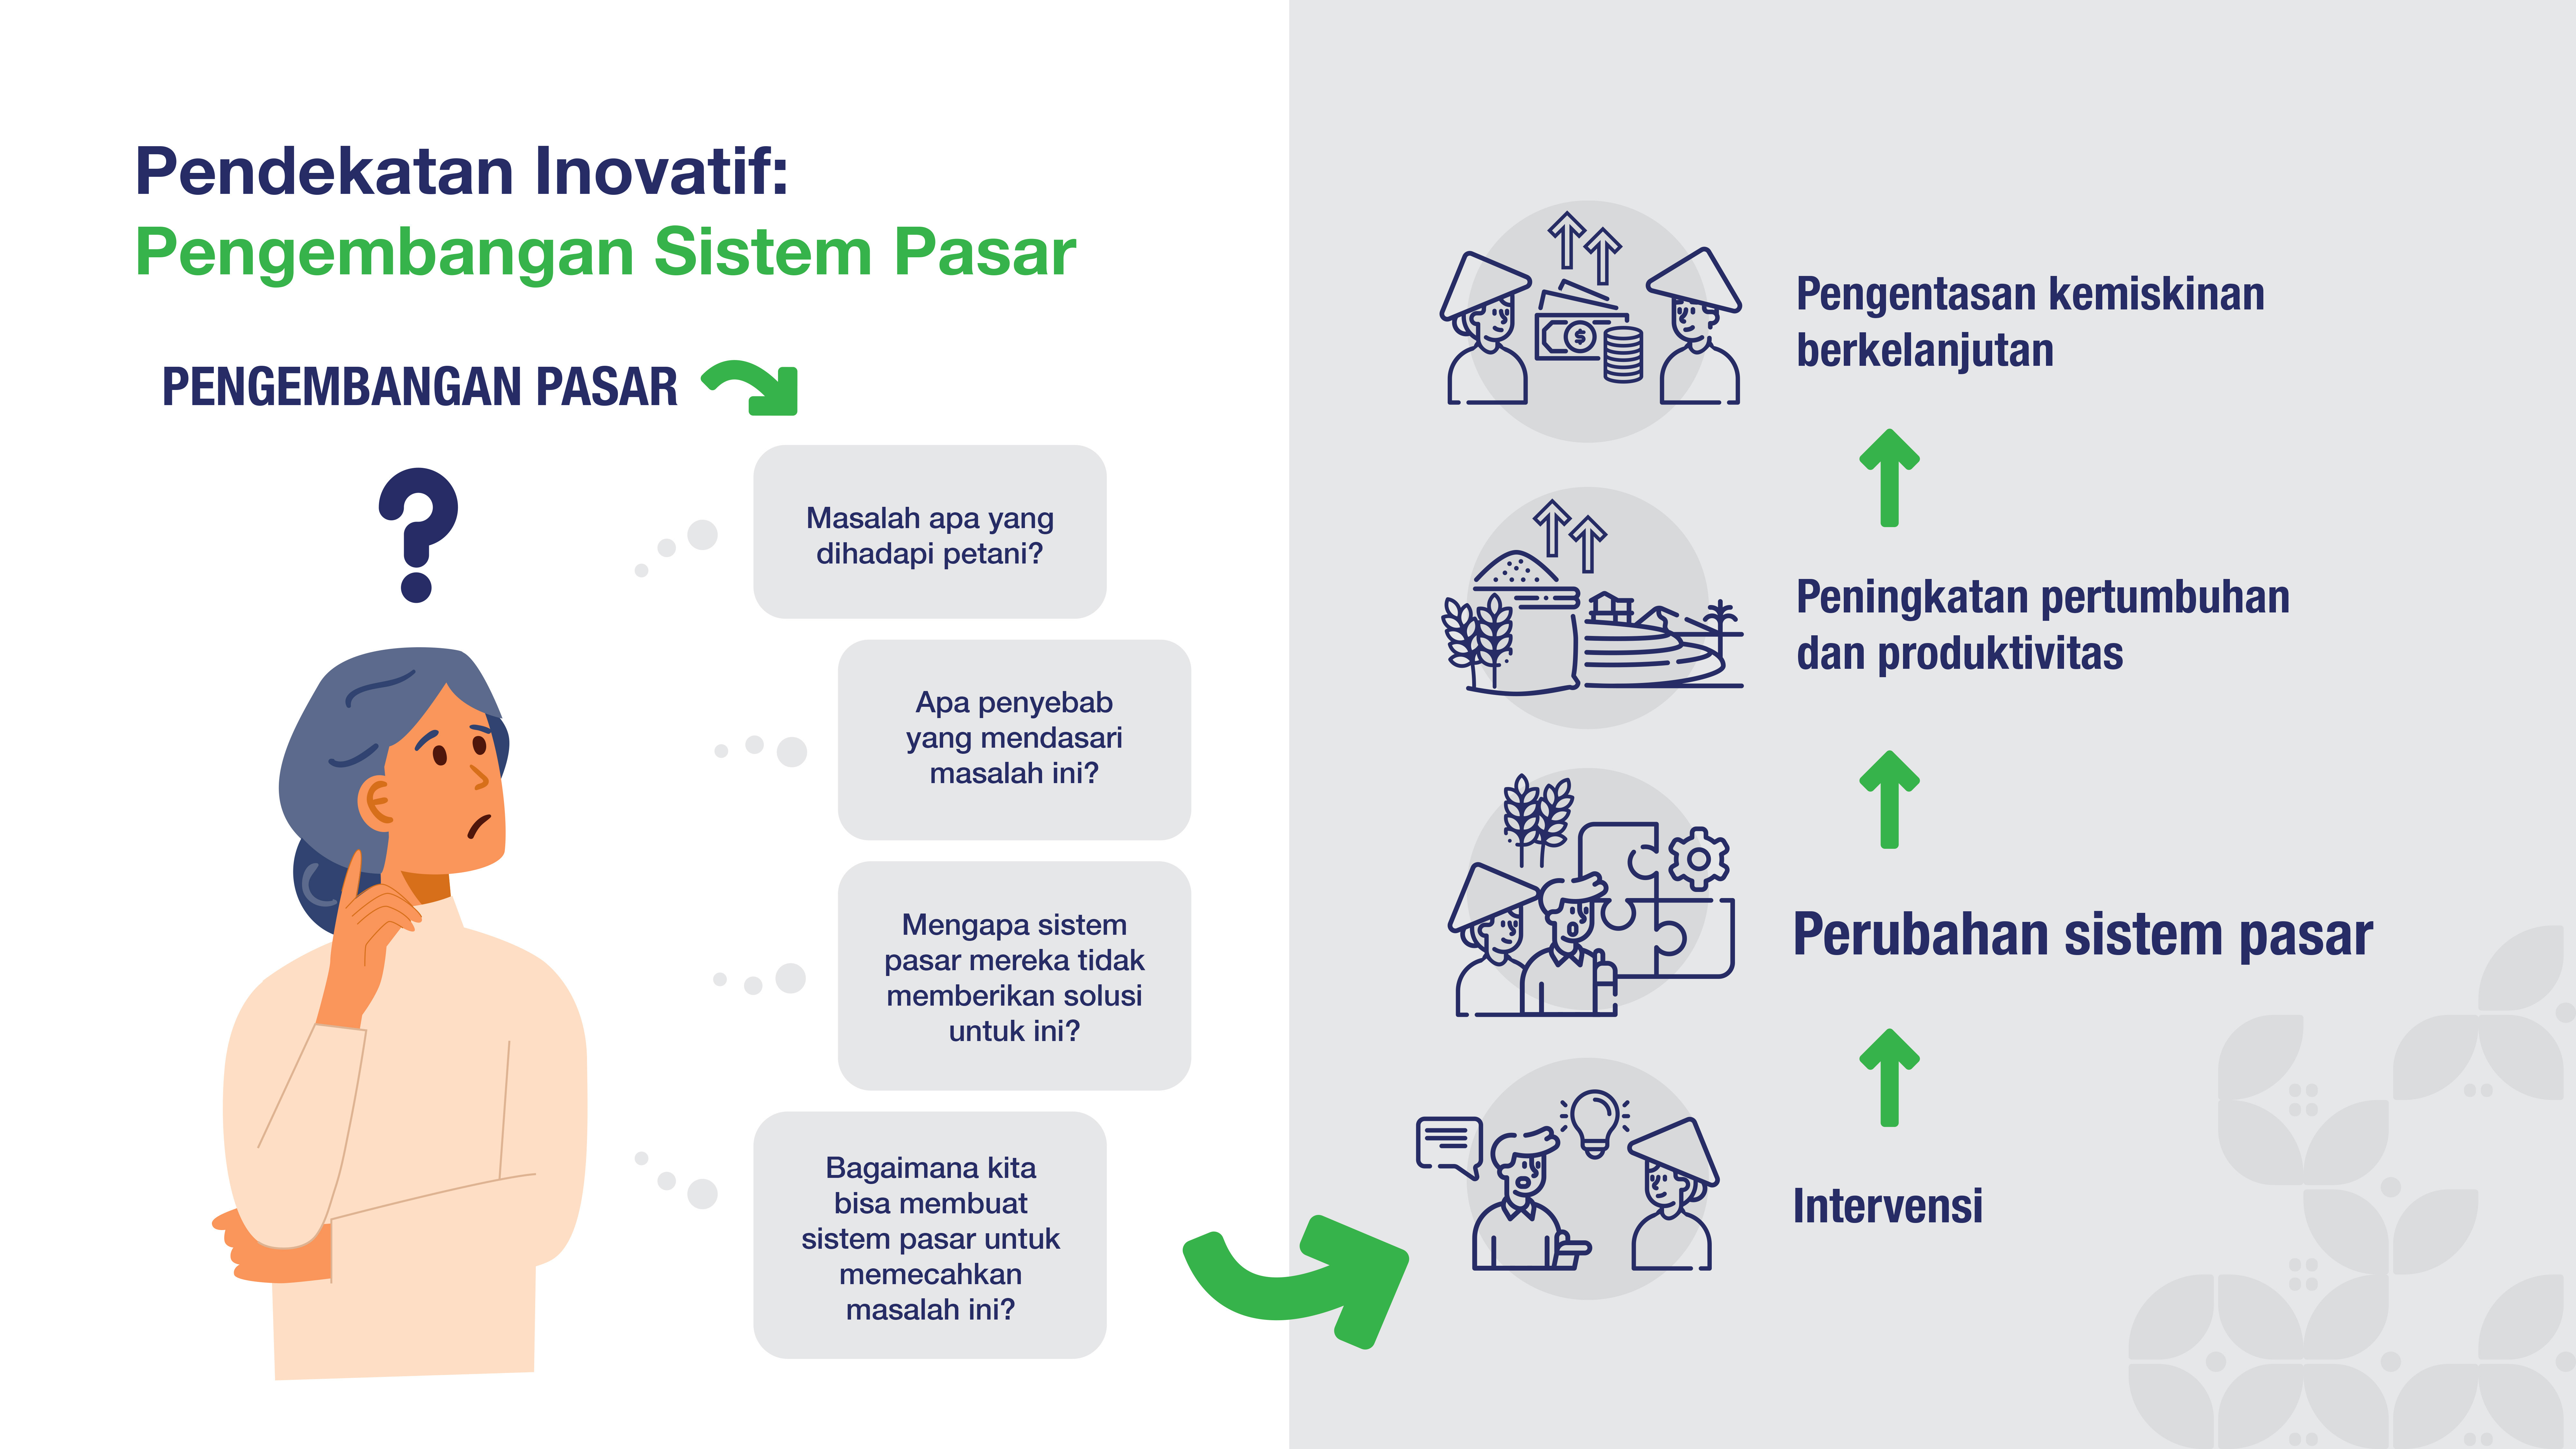 infografis pengembangan sistem pasar sebagai pendekatan inovatif yang dapat mengarah pada pengurangan kemiskinan